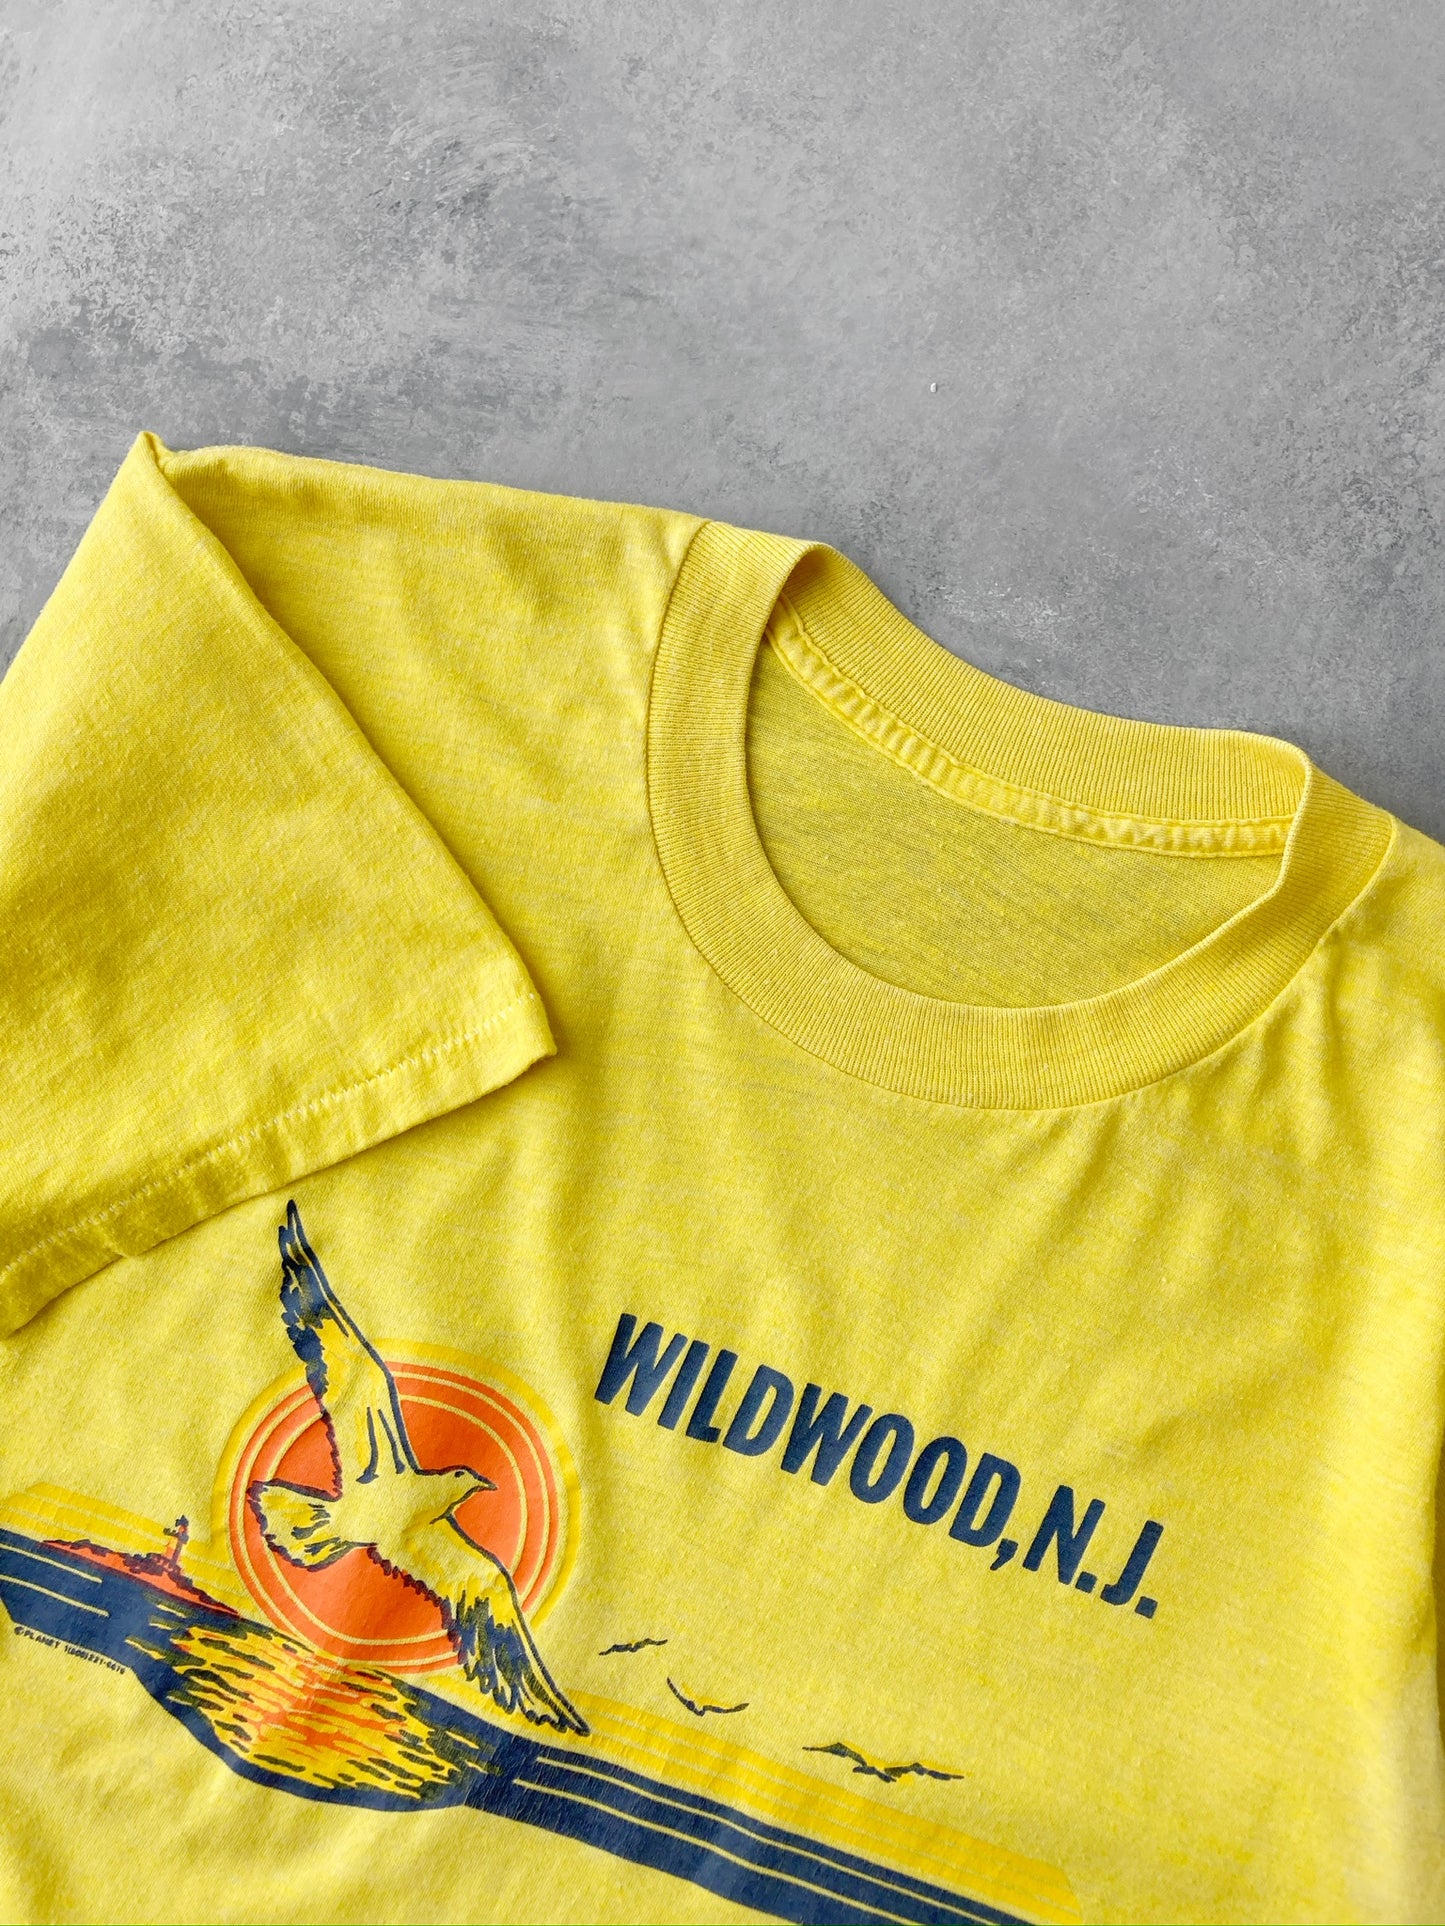 Wildwood, New Jersey T-Shirt 80's - Medium